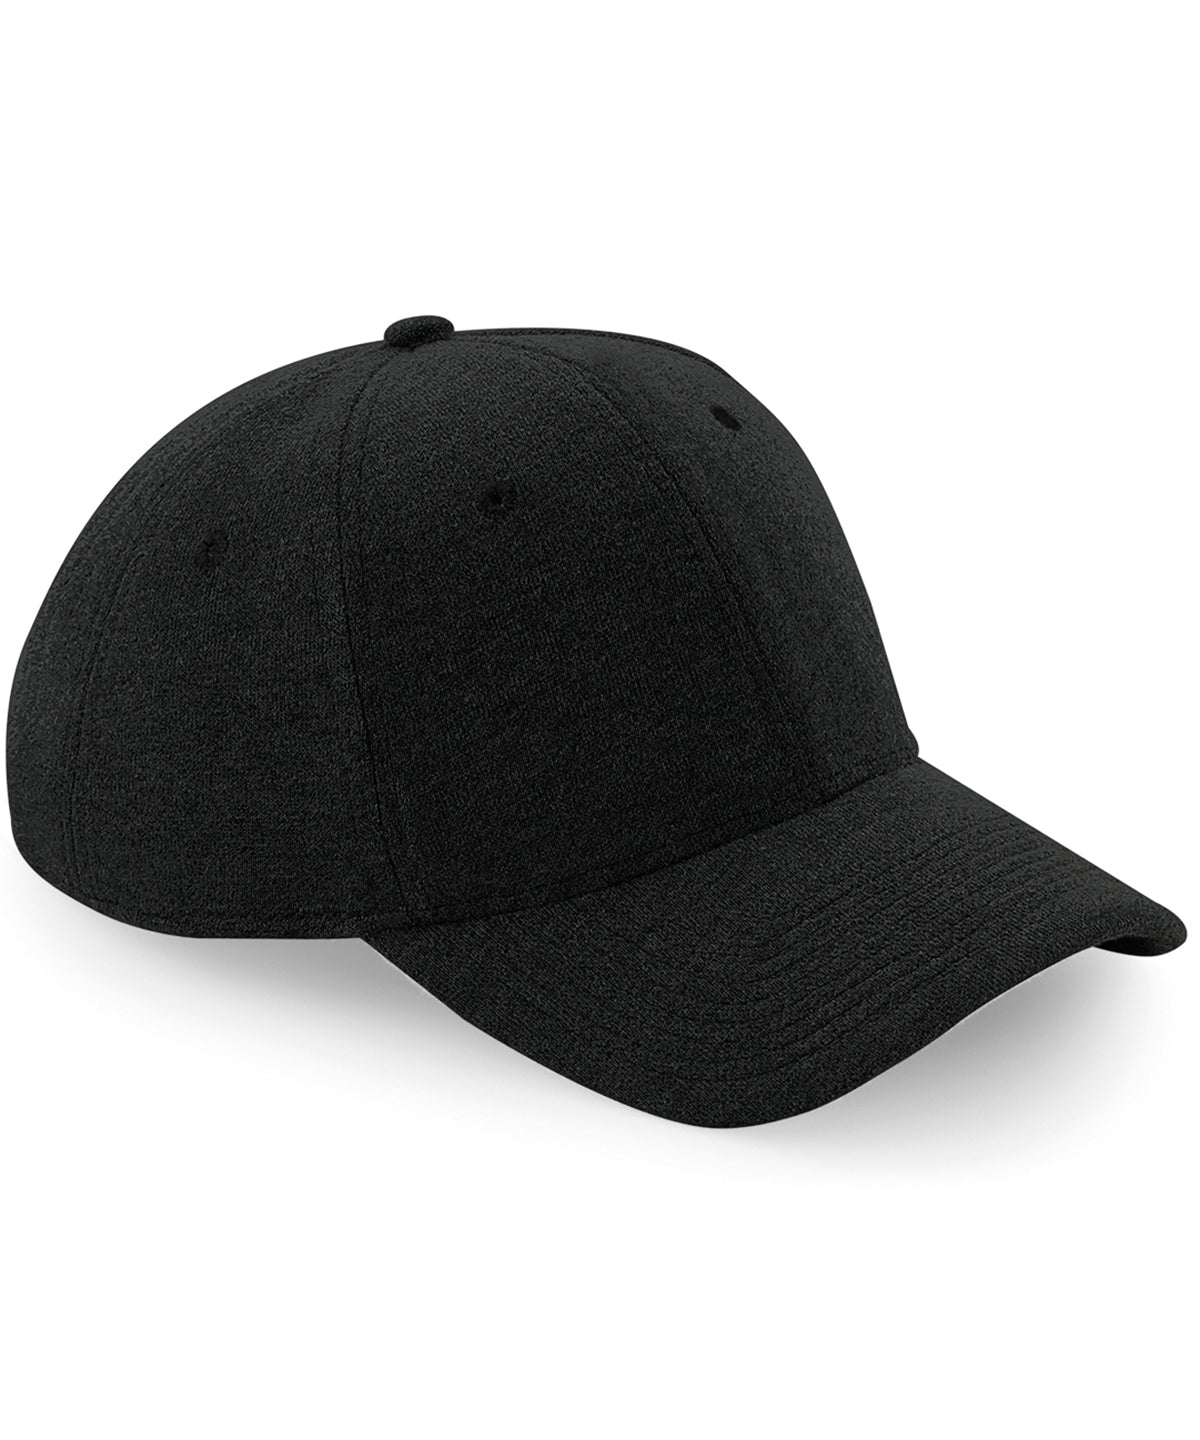 Personalised Caps - Black Beechfield Jersey athleisure baseball cap